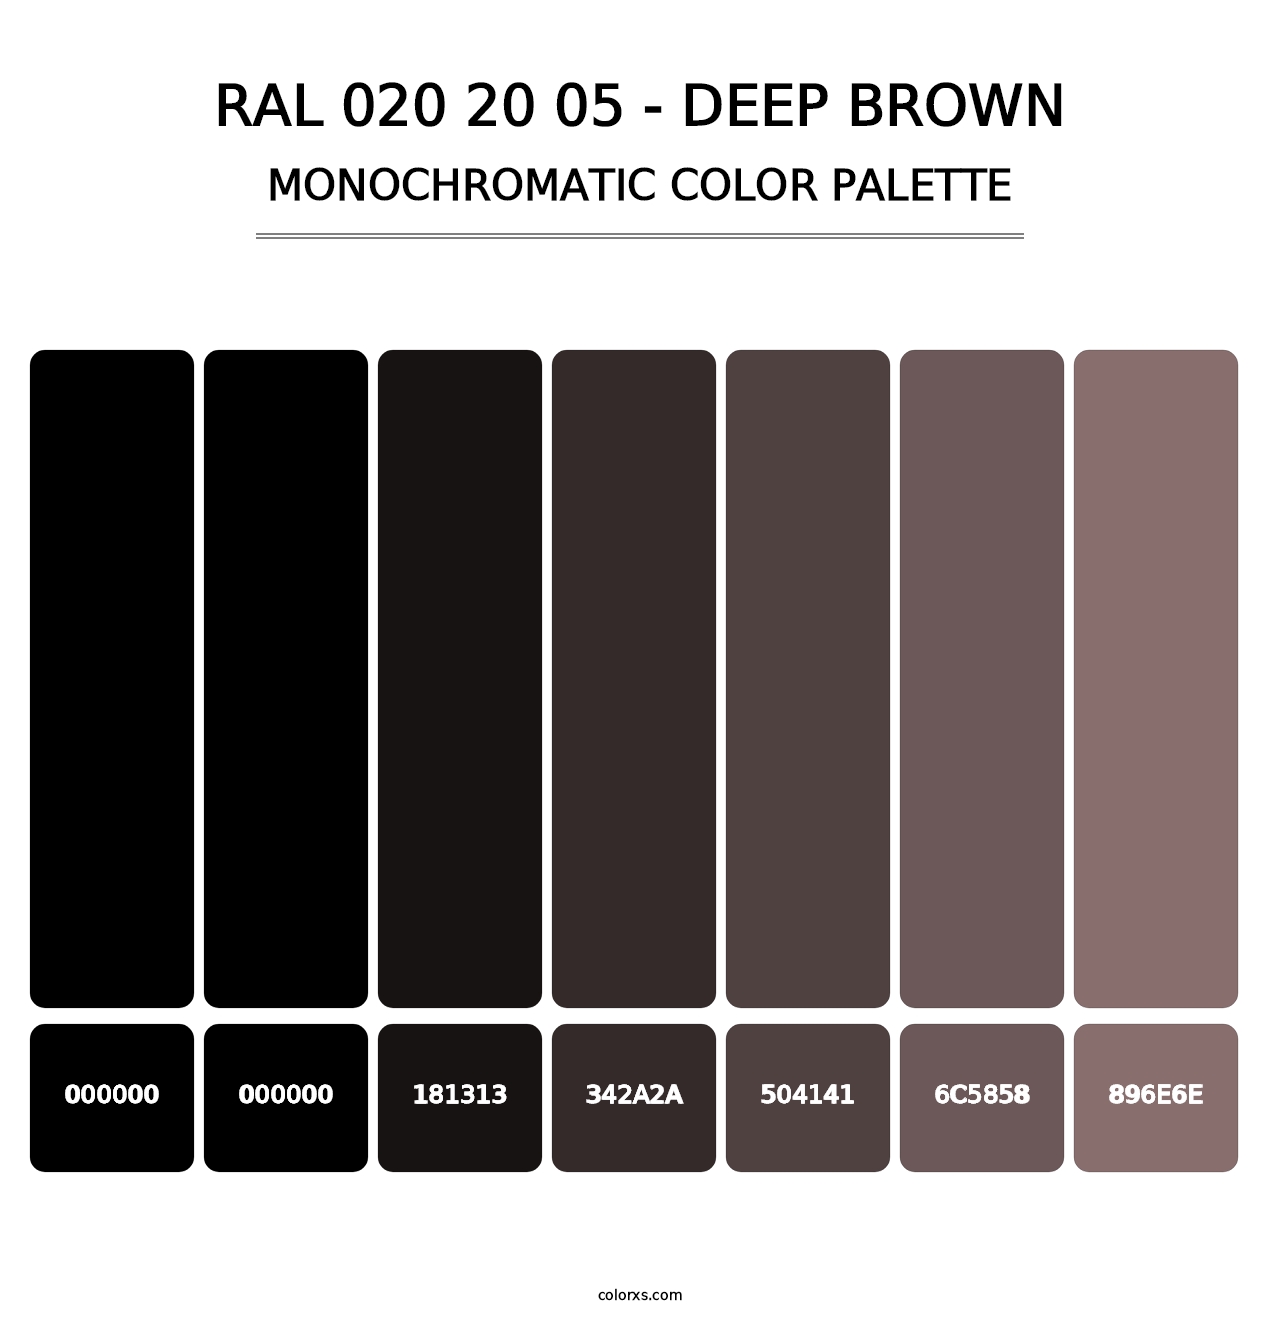 RAL 020 20 05 - Deep Brown - Monochromatic Color Palette